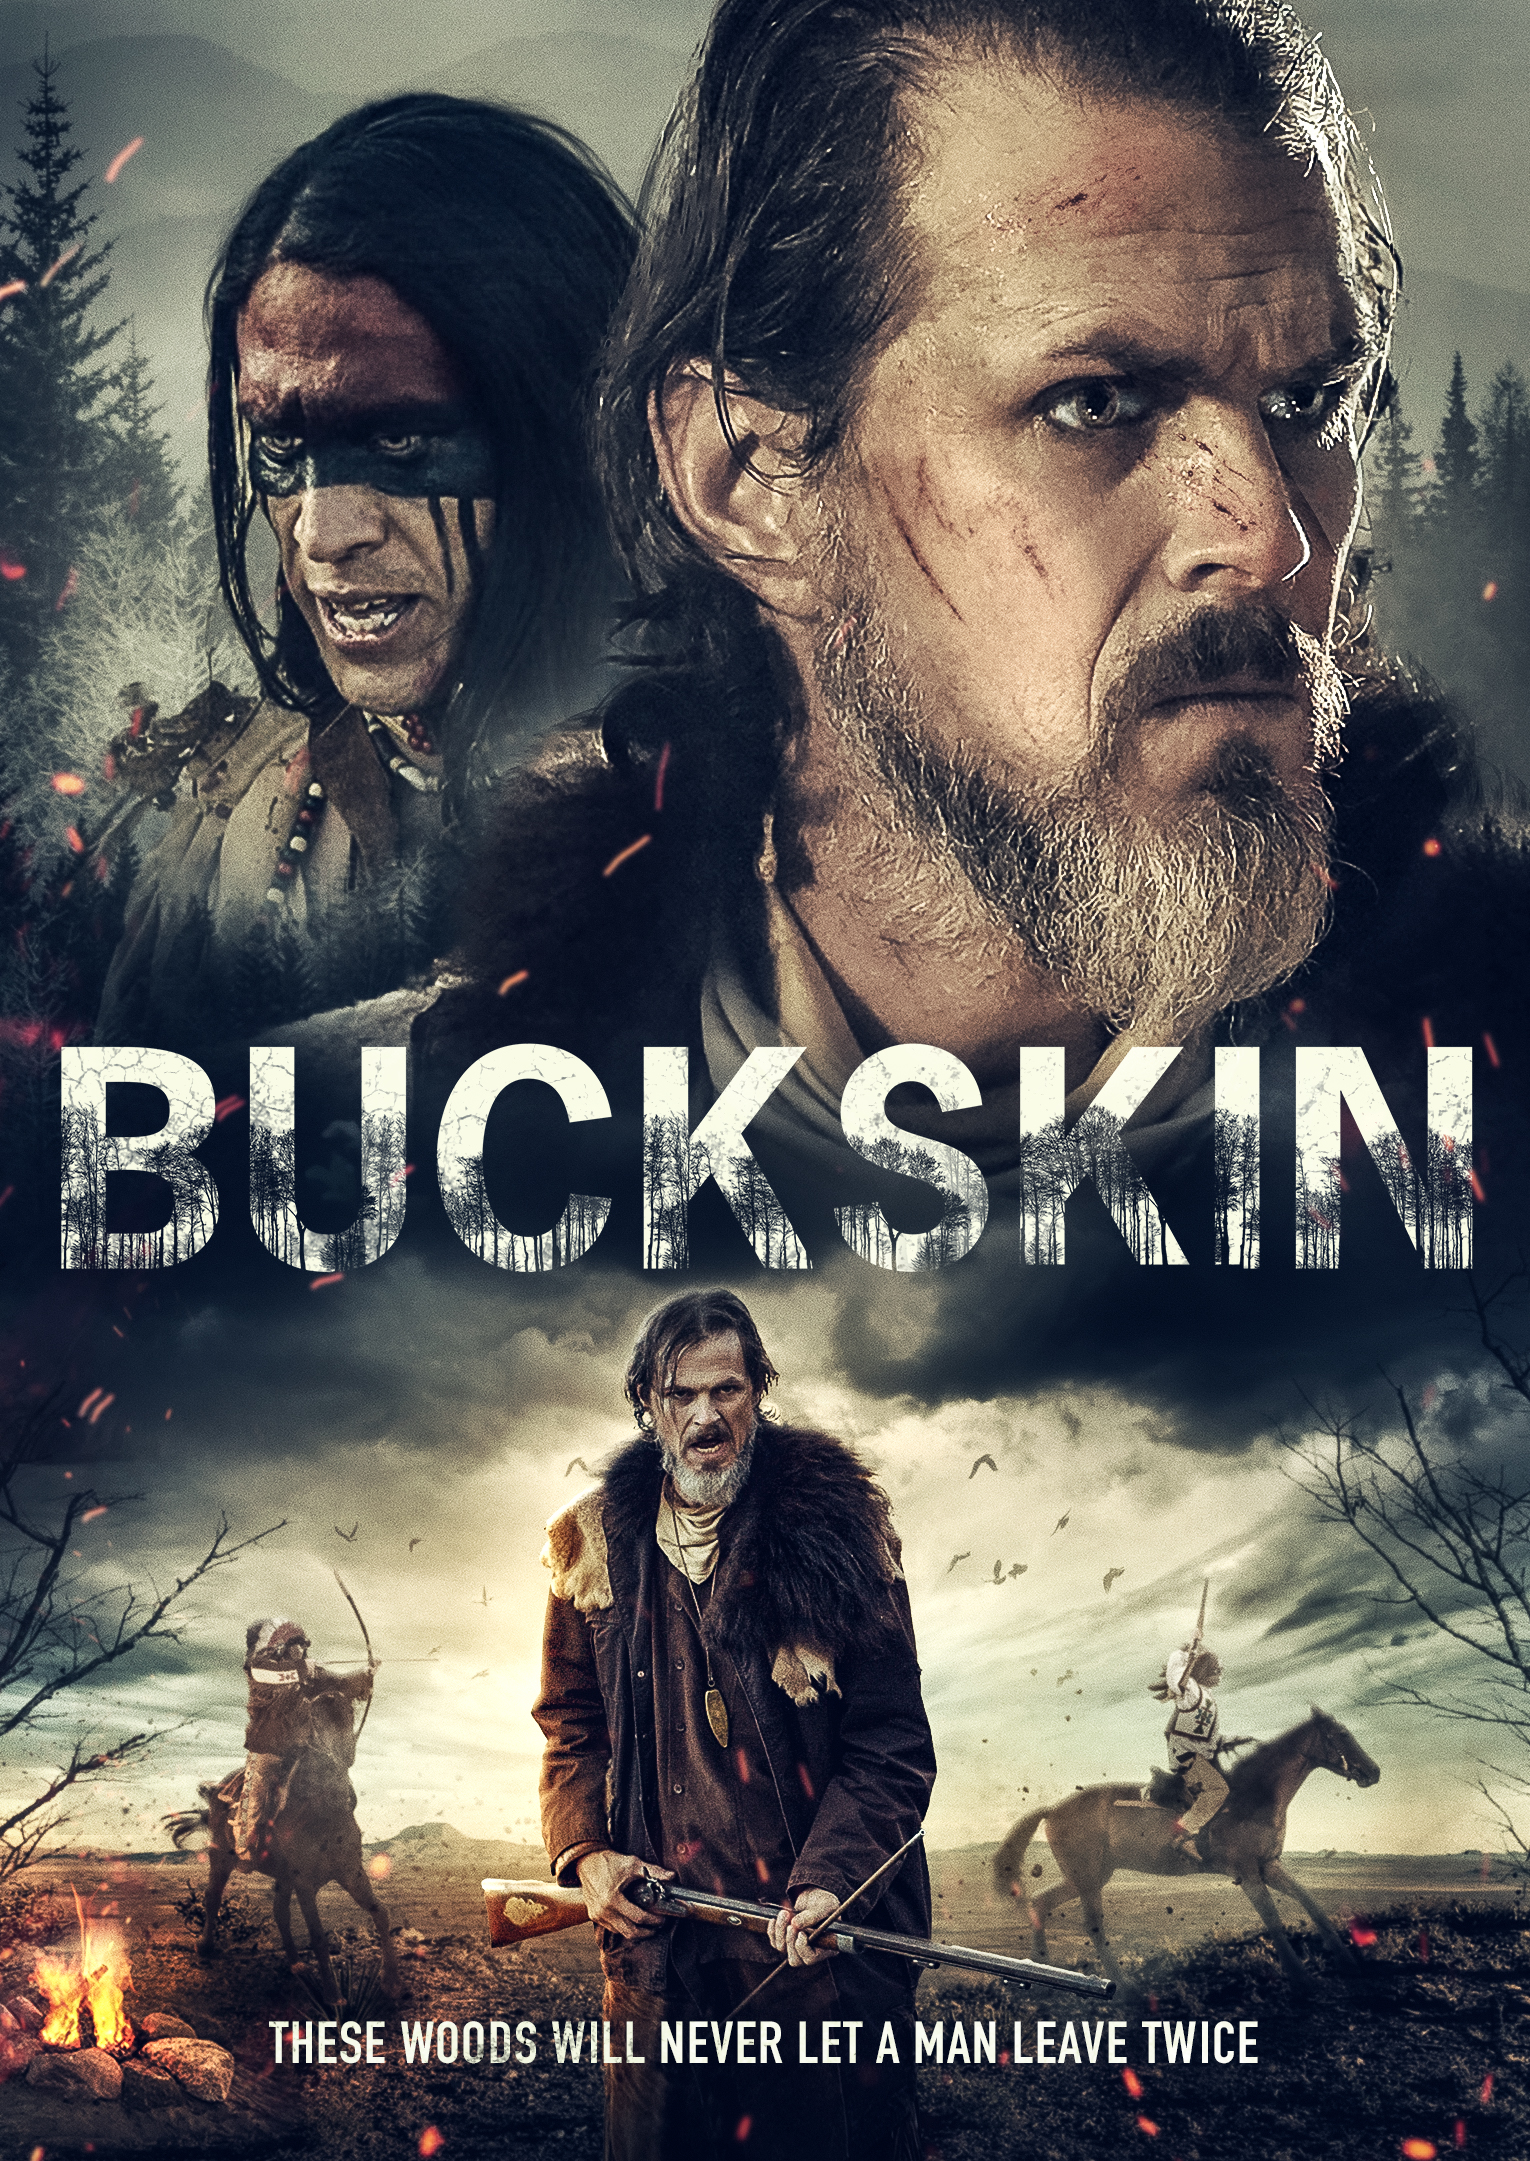 Nonton film Buckskin layarkaca21 indoxx1 ganool online streaming terbaru